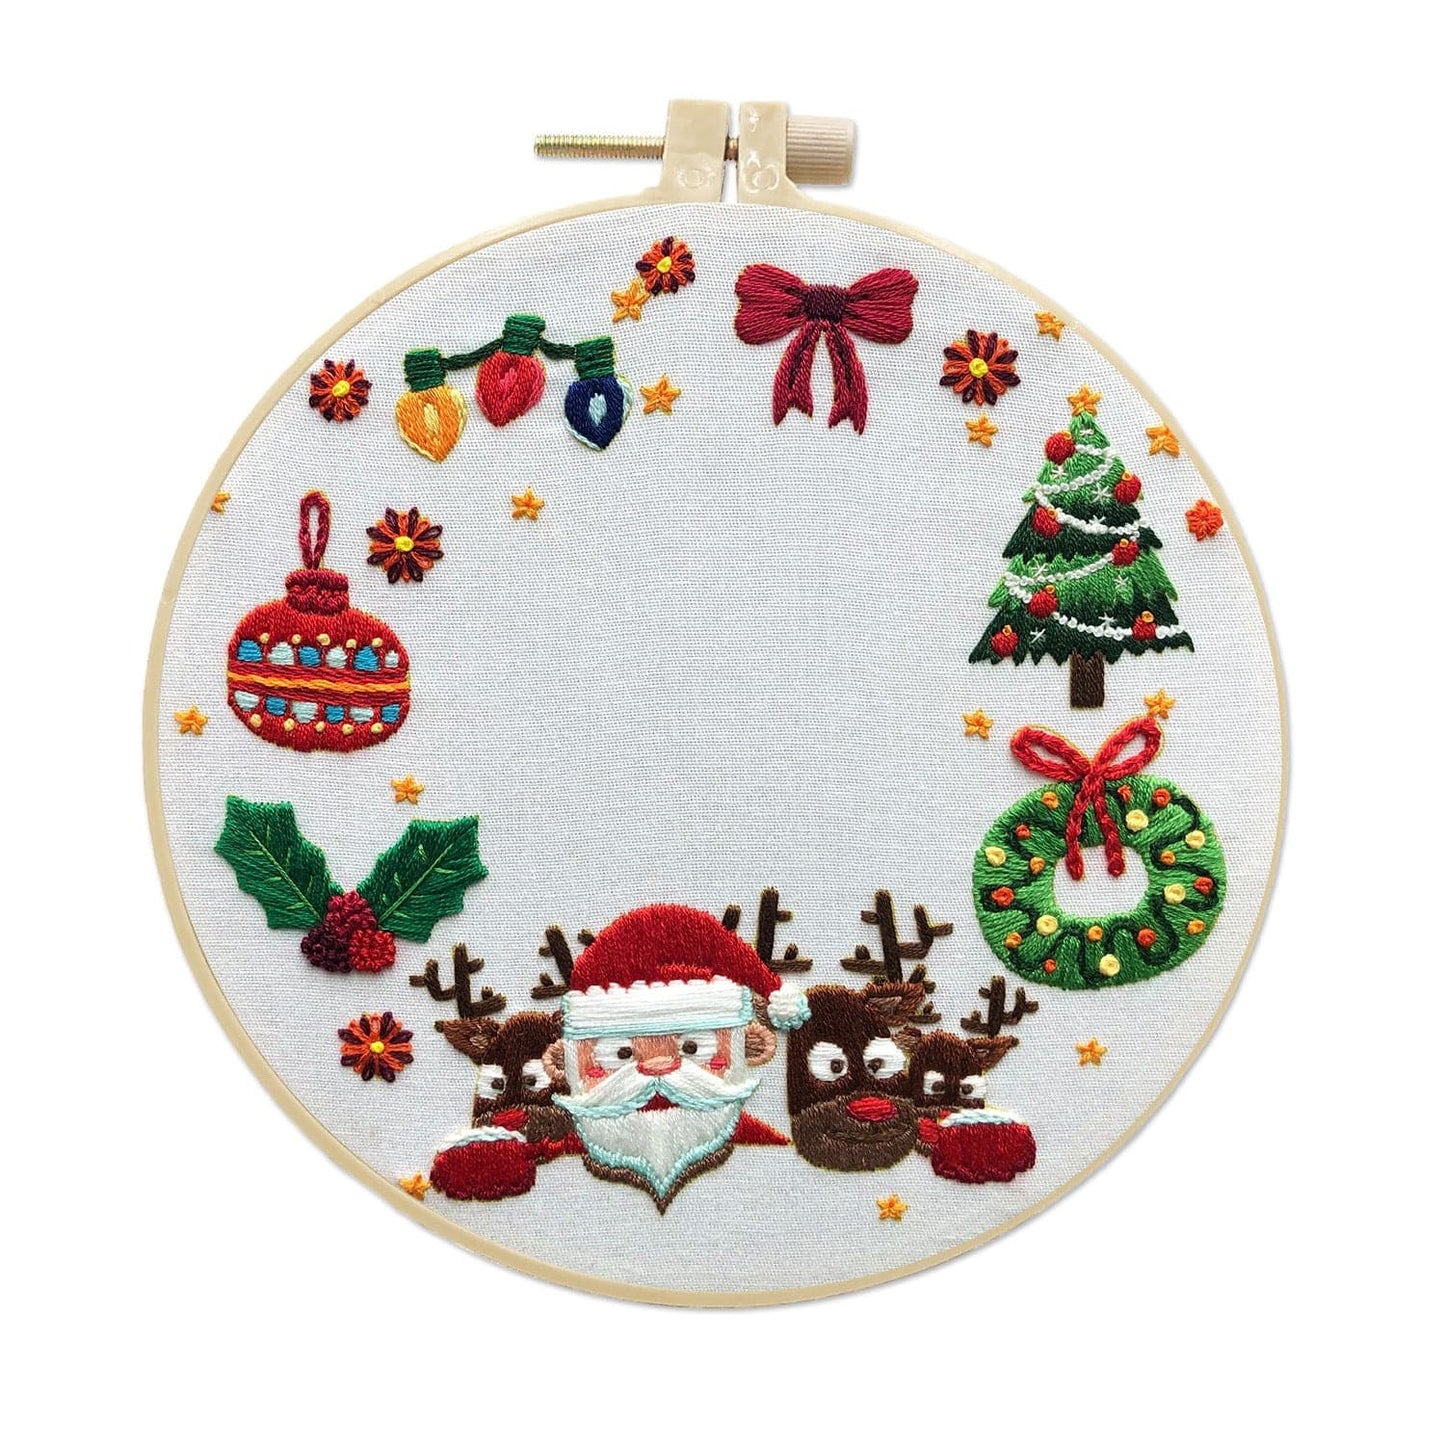 Father Christmas Snowman Garland - Embroidery ktclubs.com